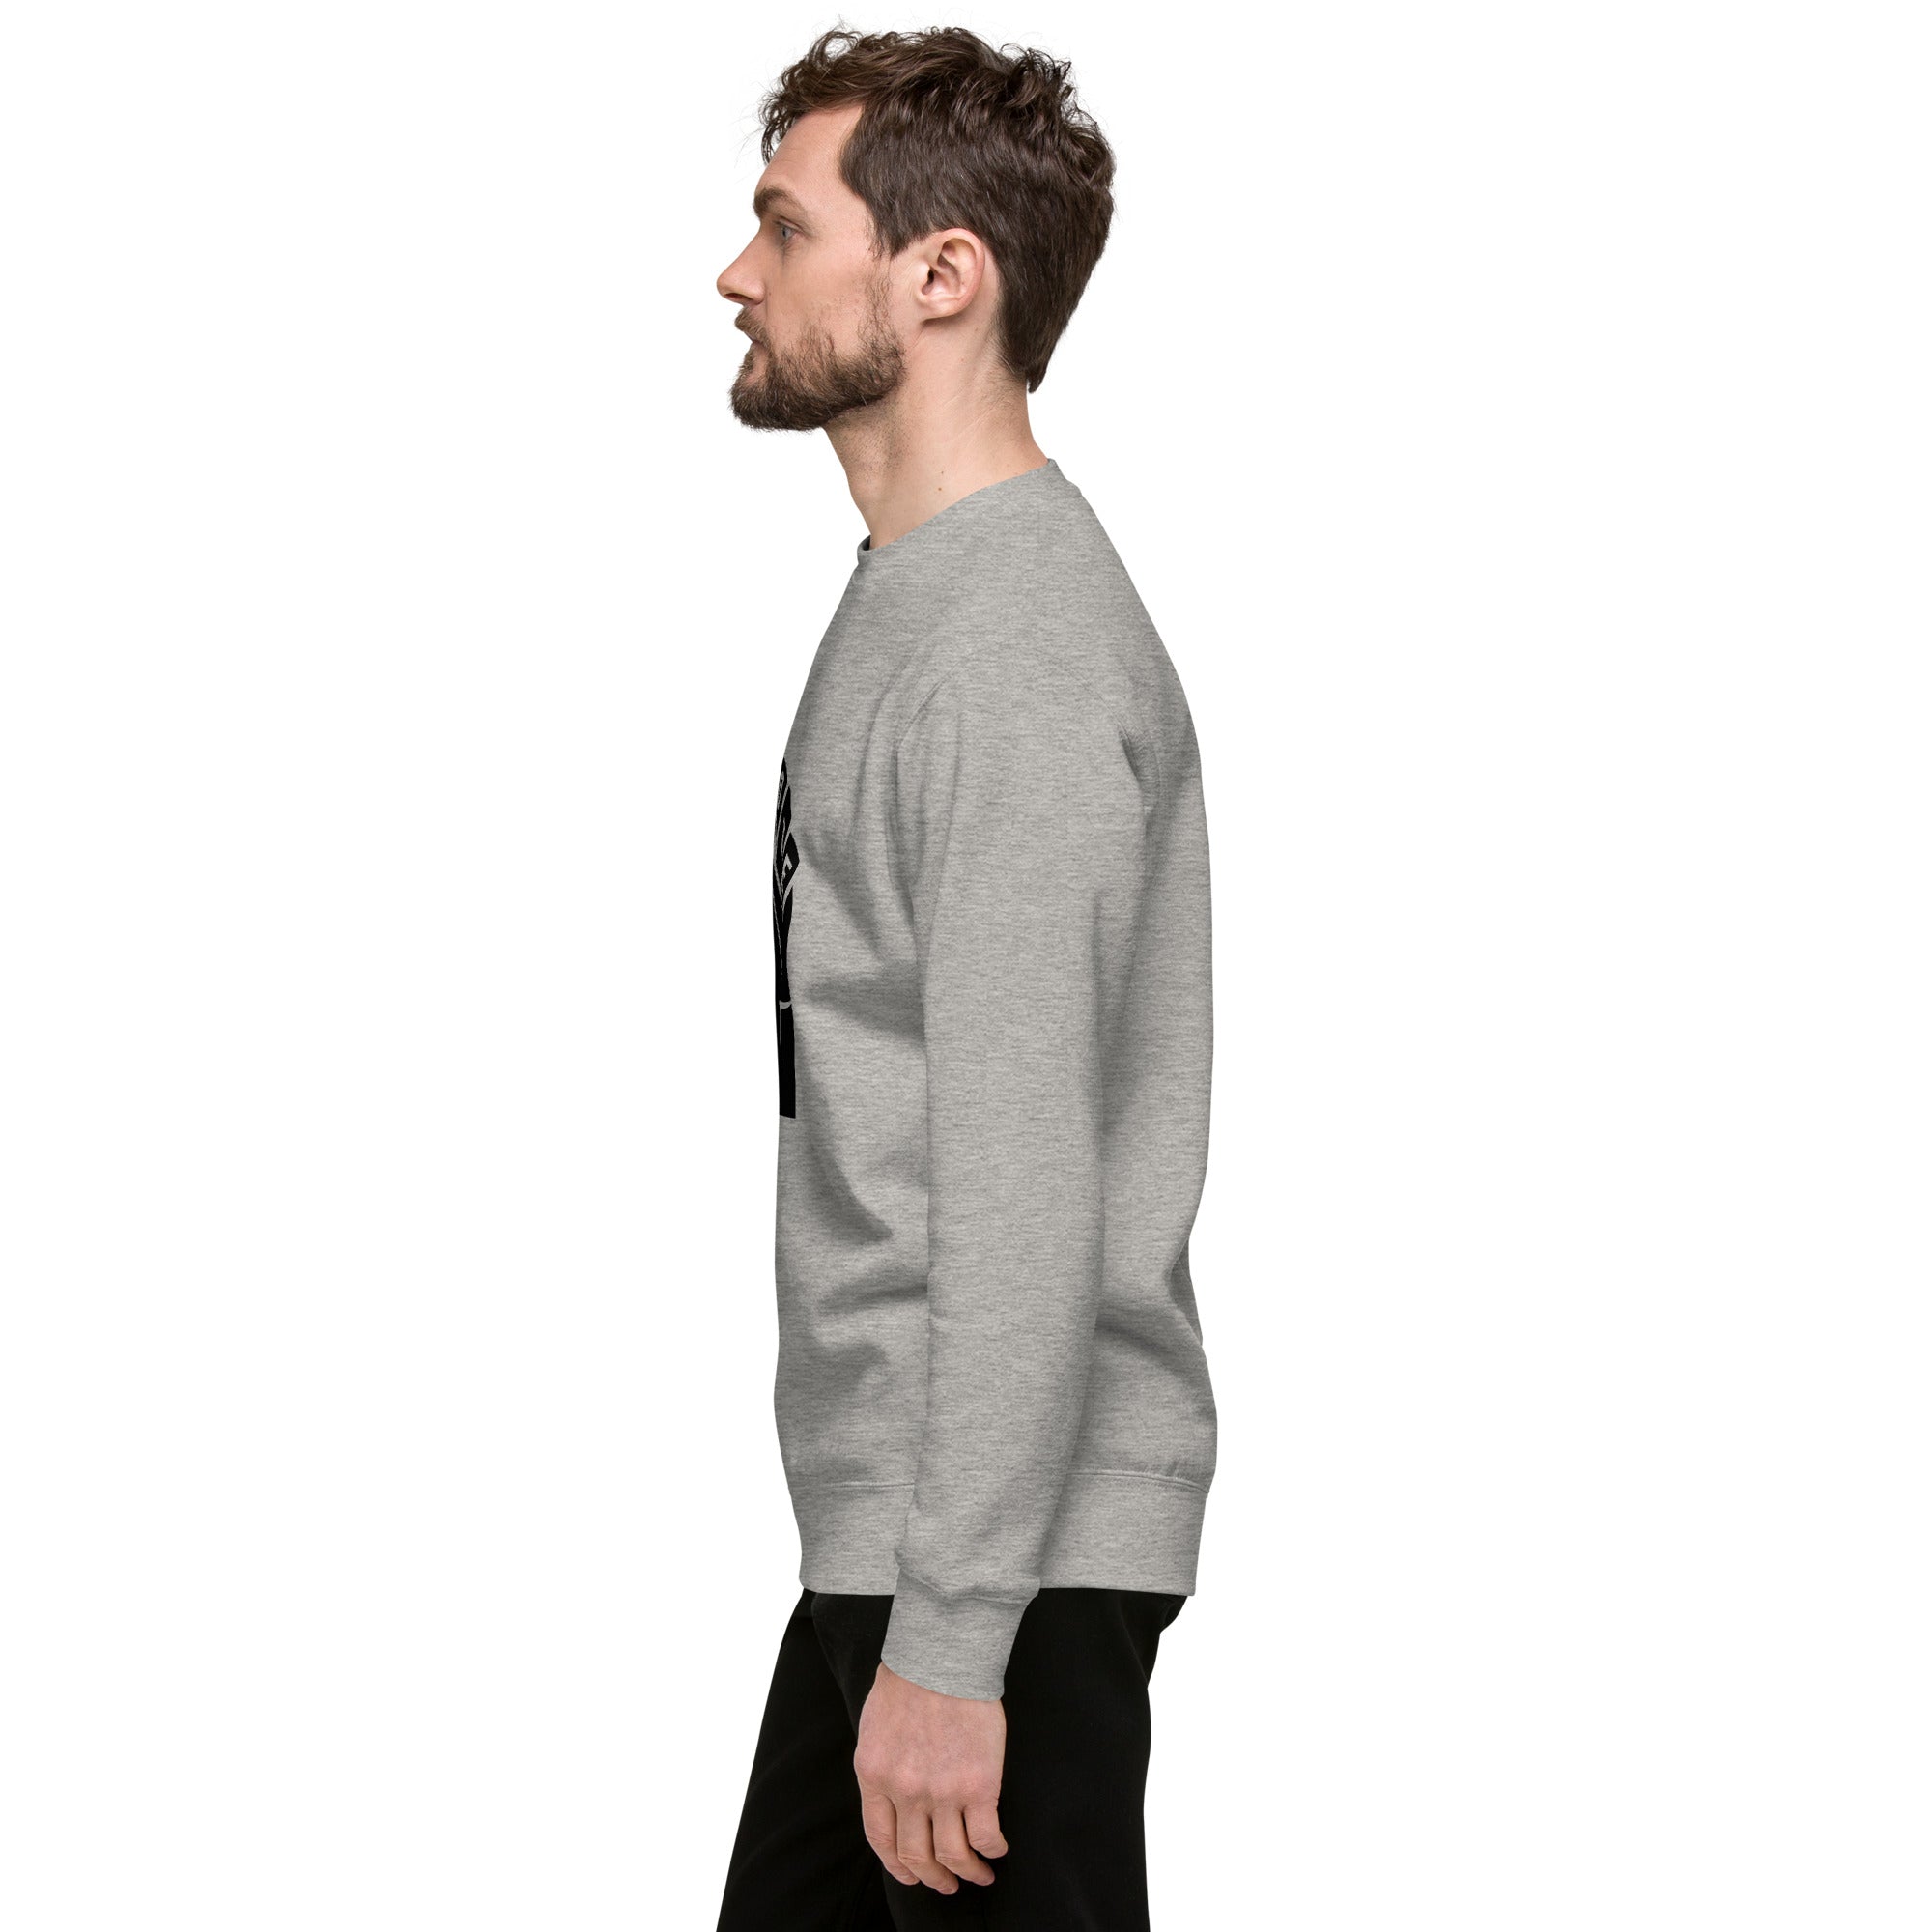 VOTE POWER- Unisex Premium Sweatshirt